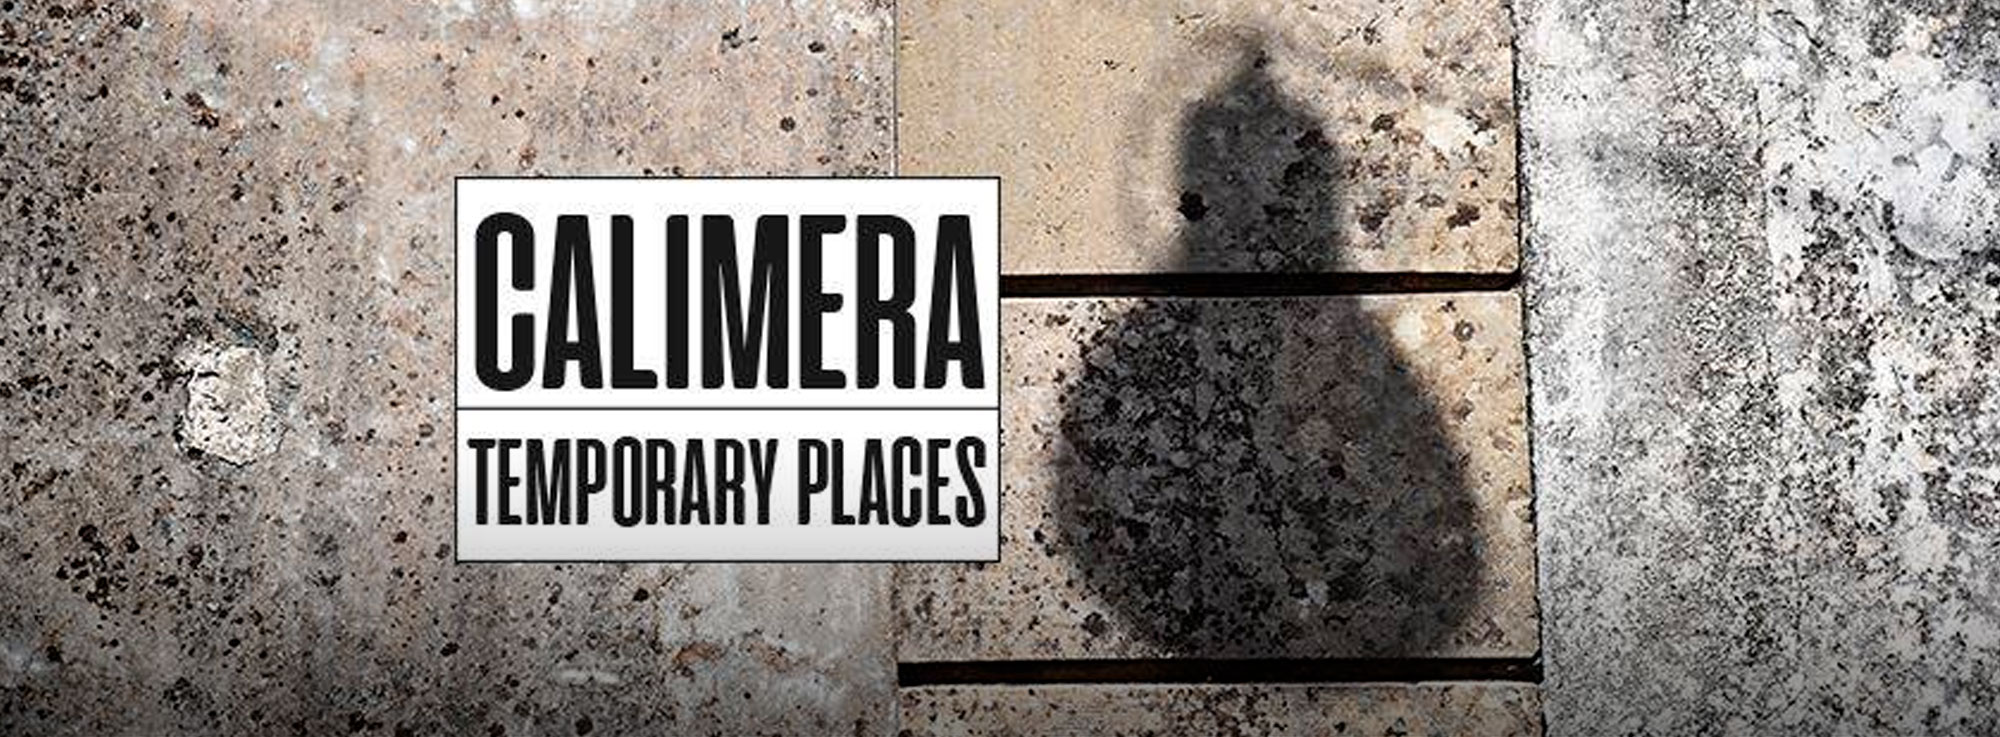 Calimera: Calimera, temporary places